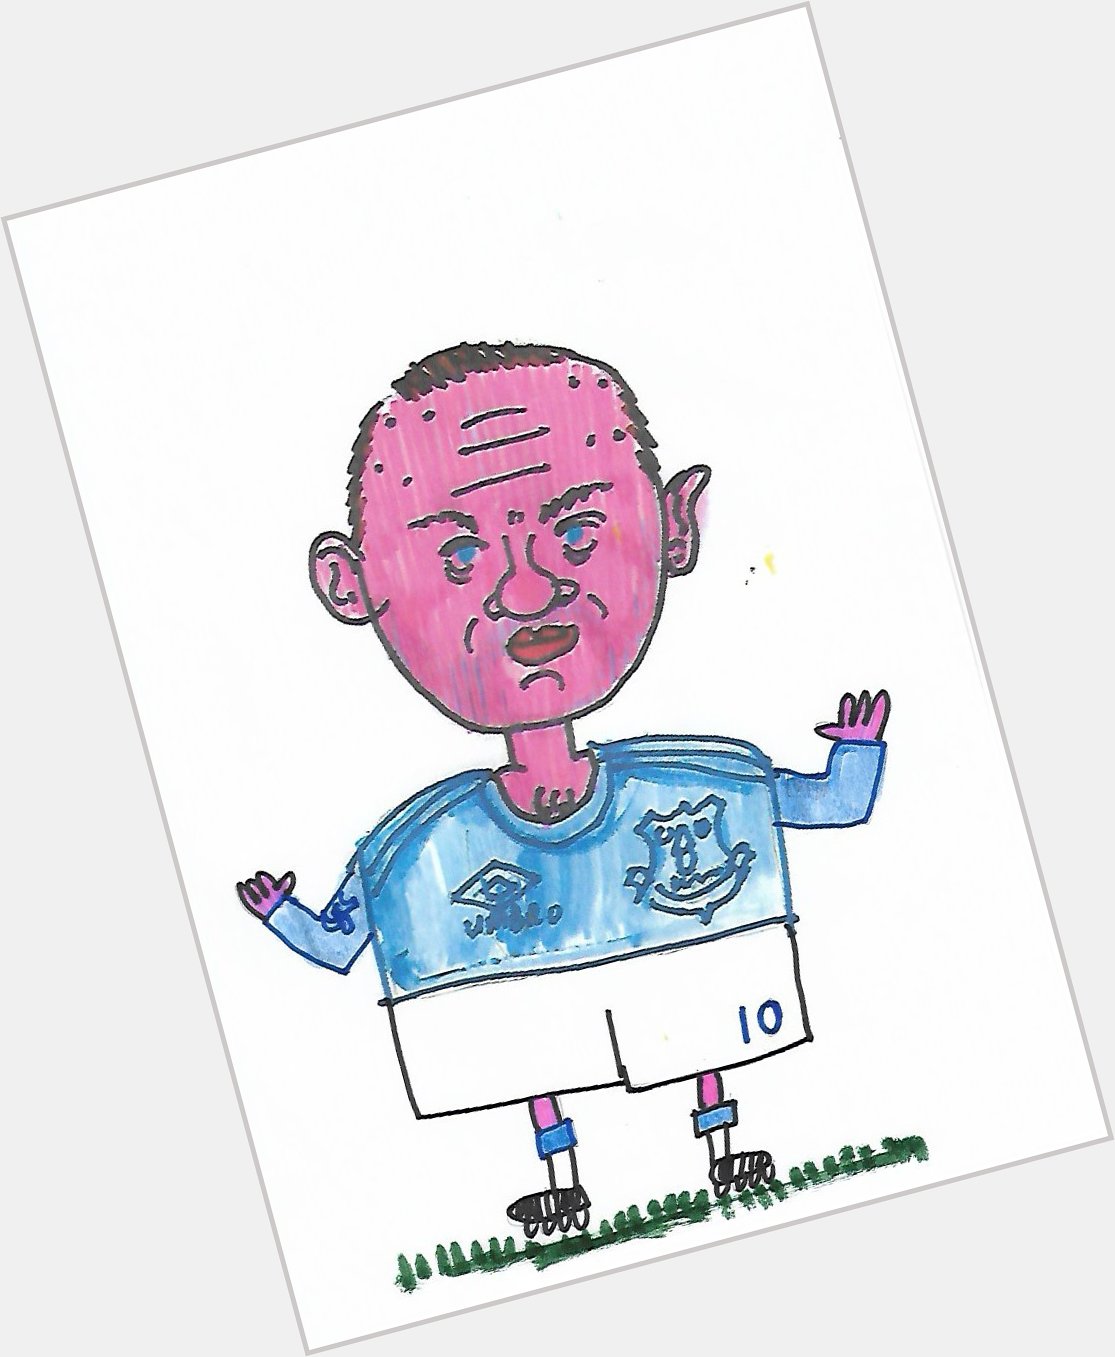    today\s is Wayne Rooney, happy birthday Wayne!! 